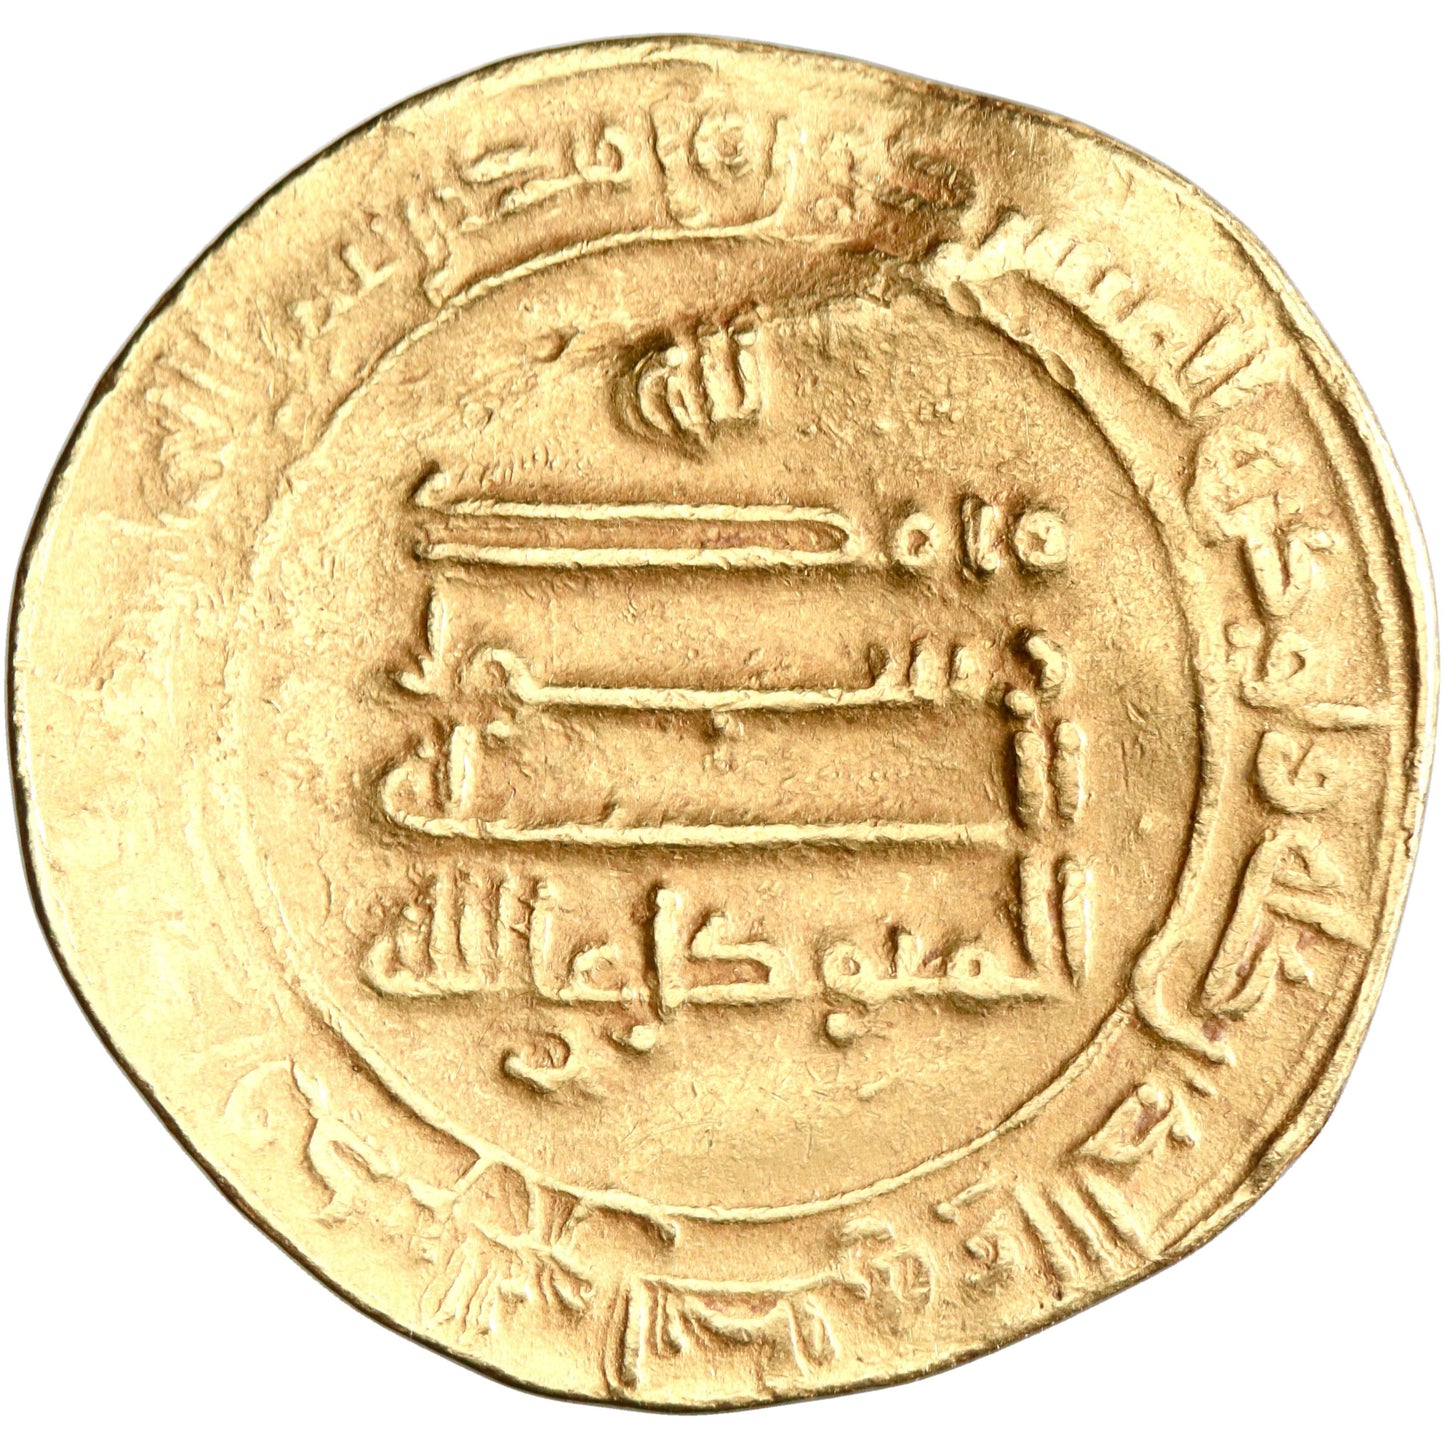 Abbasid, al-Mutawakkil, gold dinar, Misr (Egypt) mint, AH 239, citing Abu 'Abd Allah